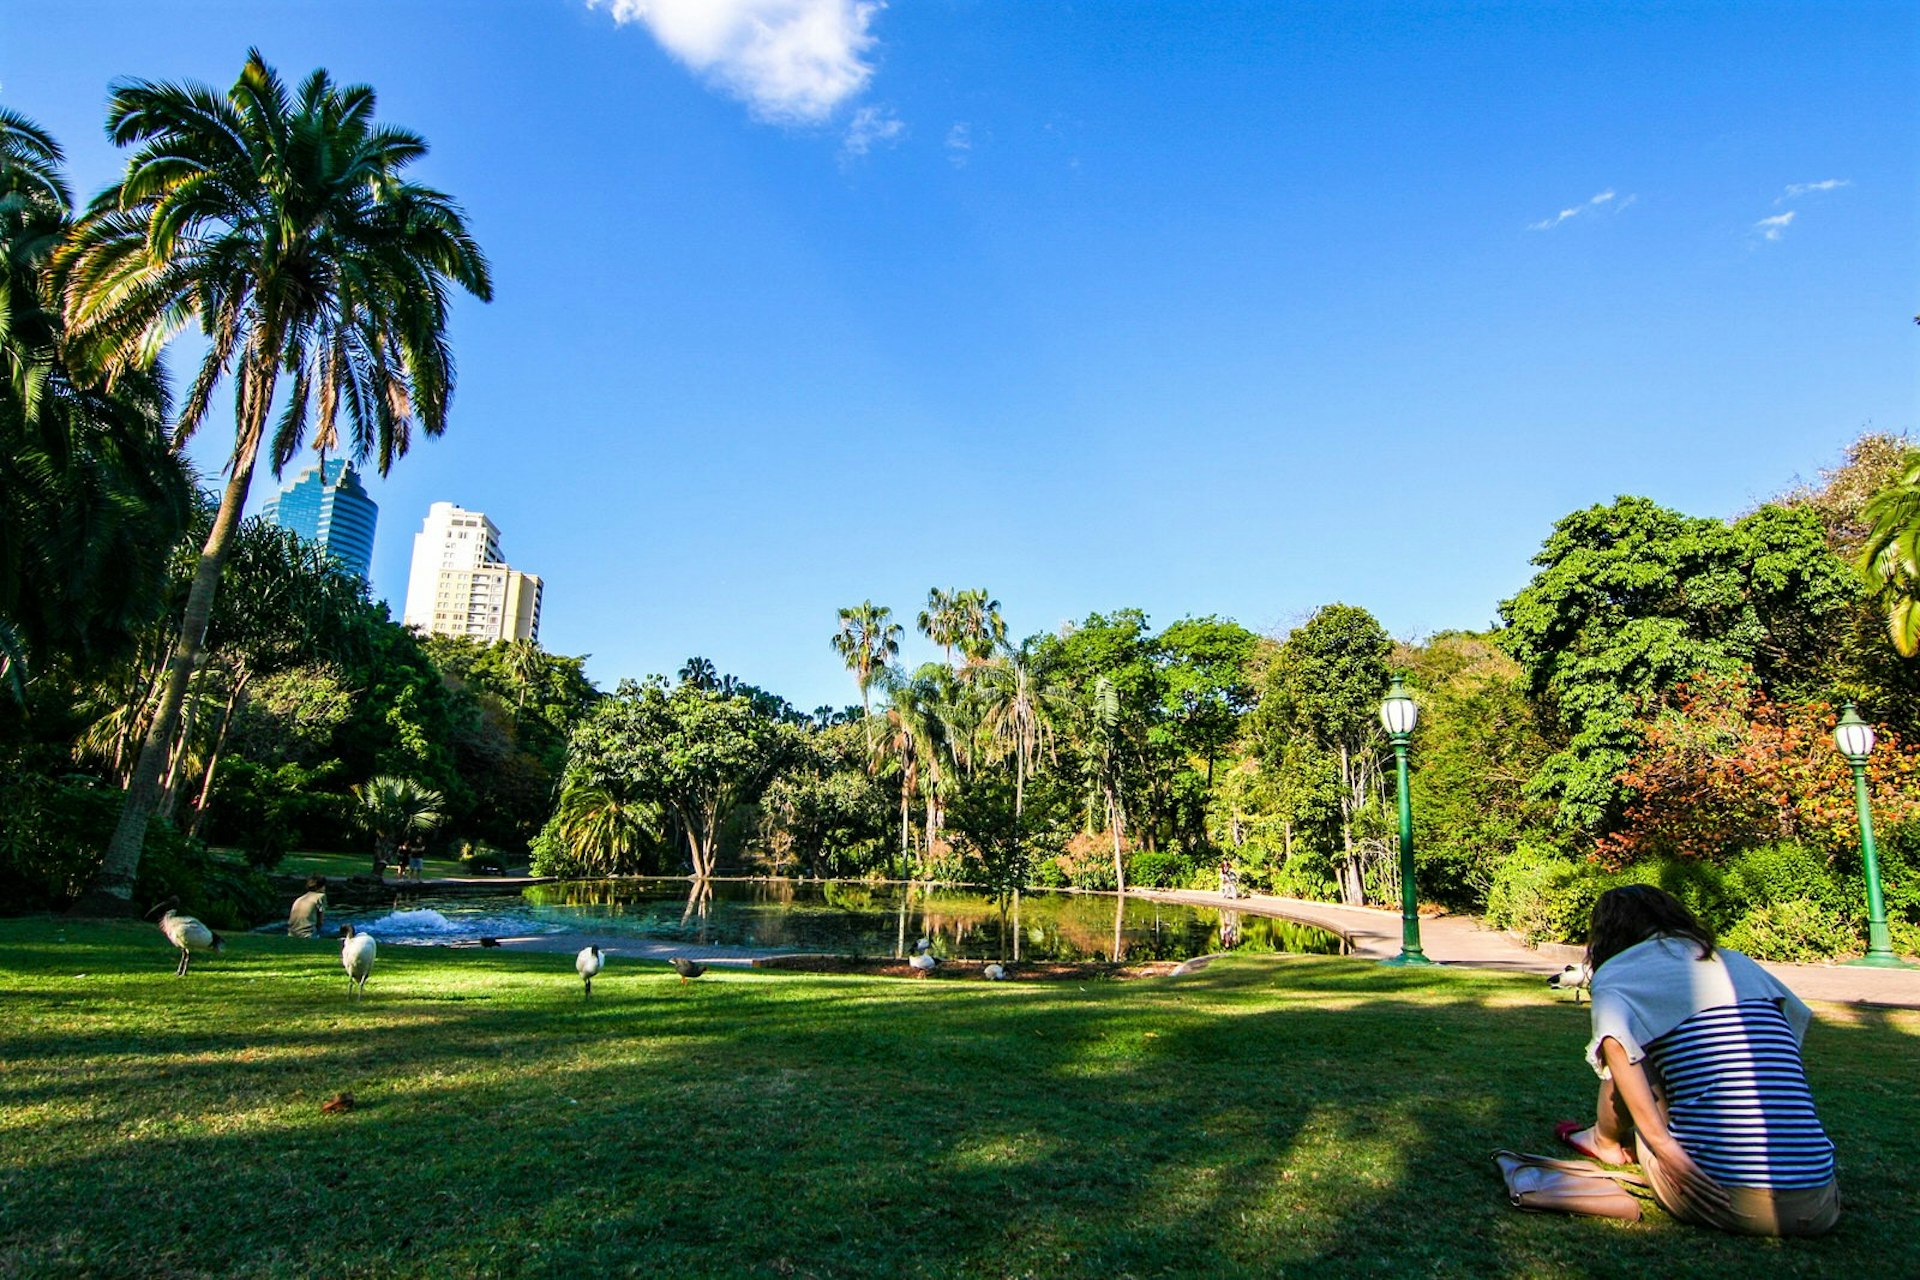 City Botanic Gardens, Brisbane